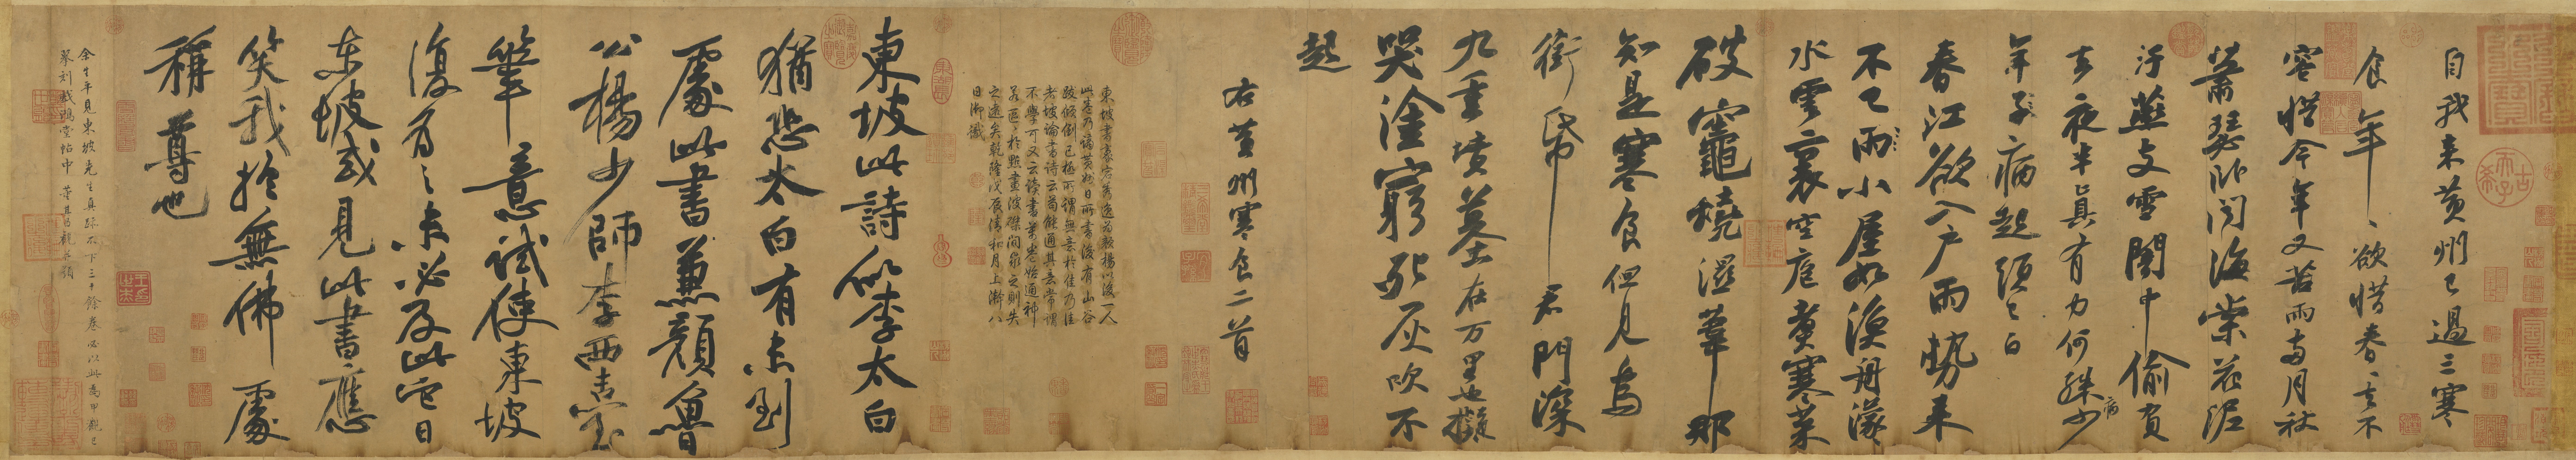 Su Shi Calligraphy China 11138x1988